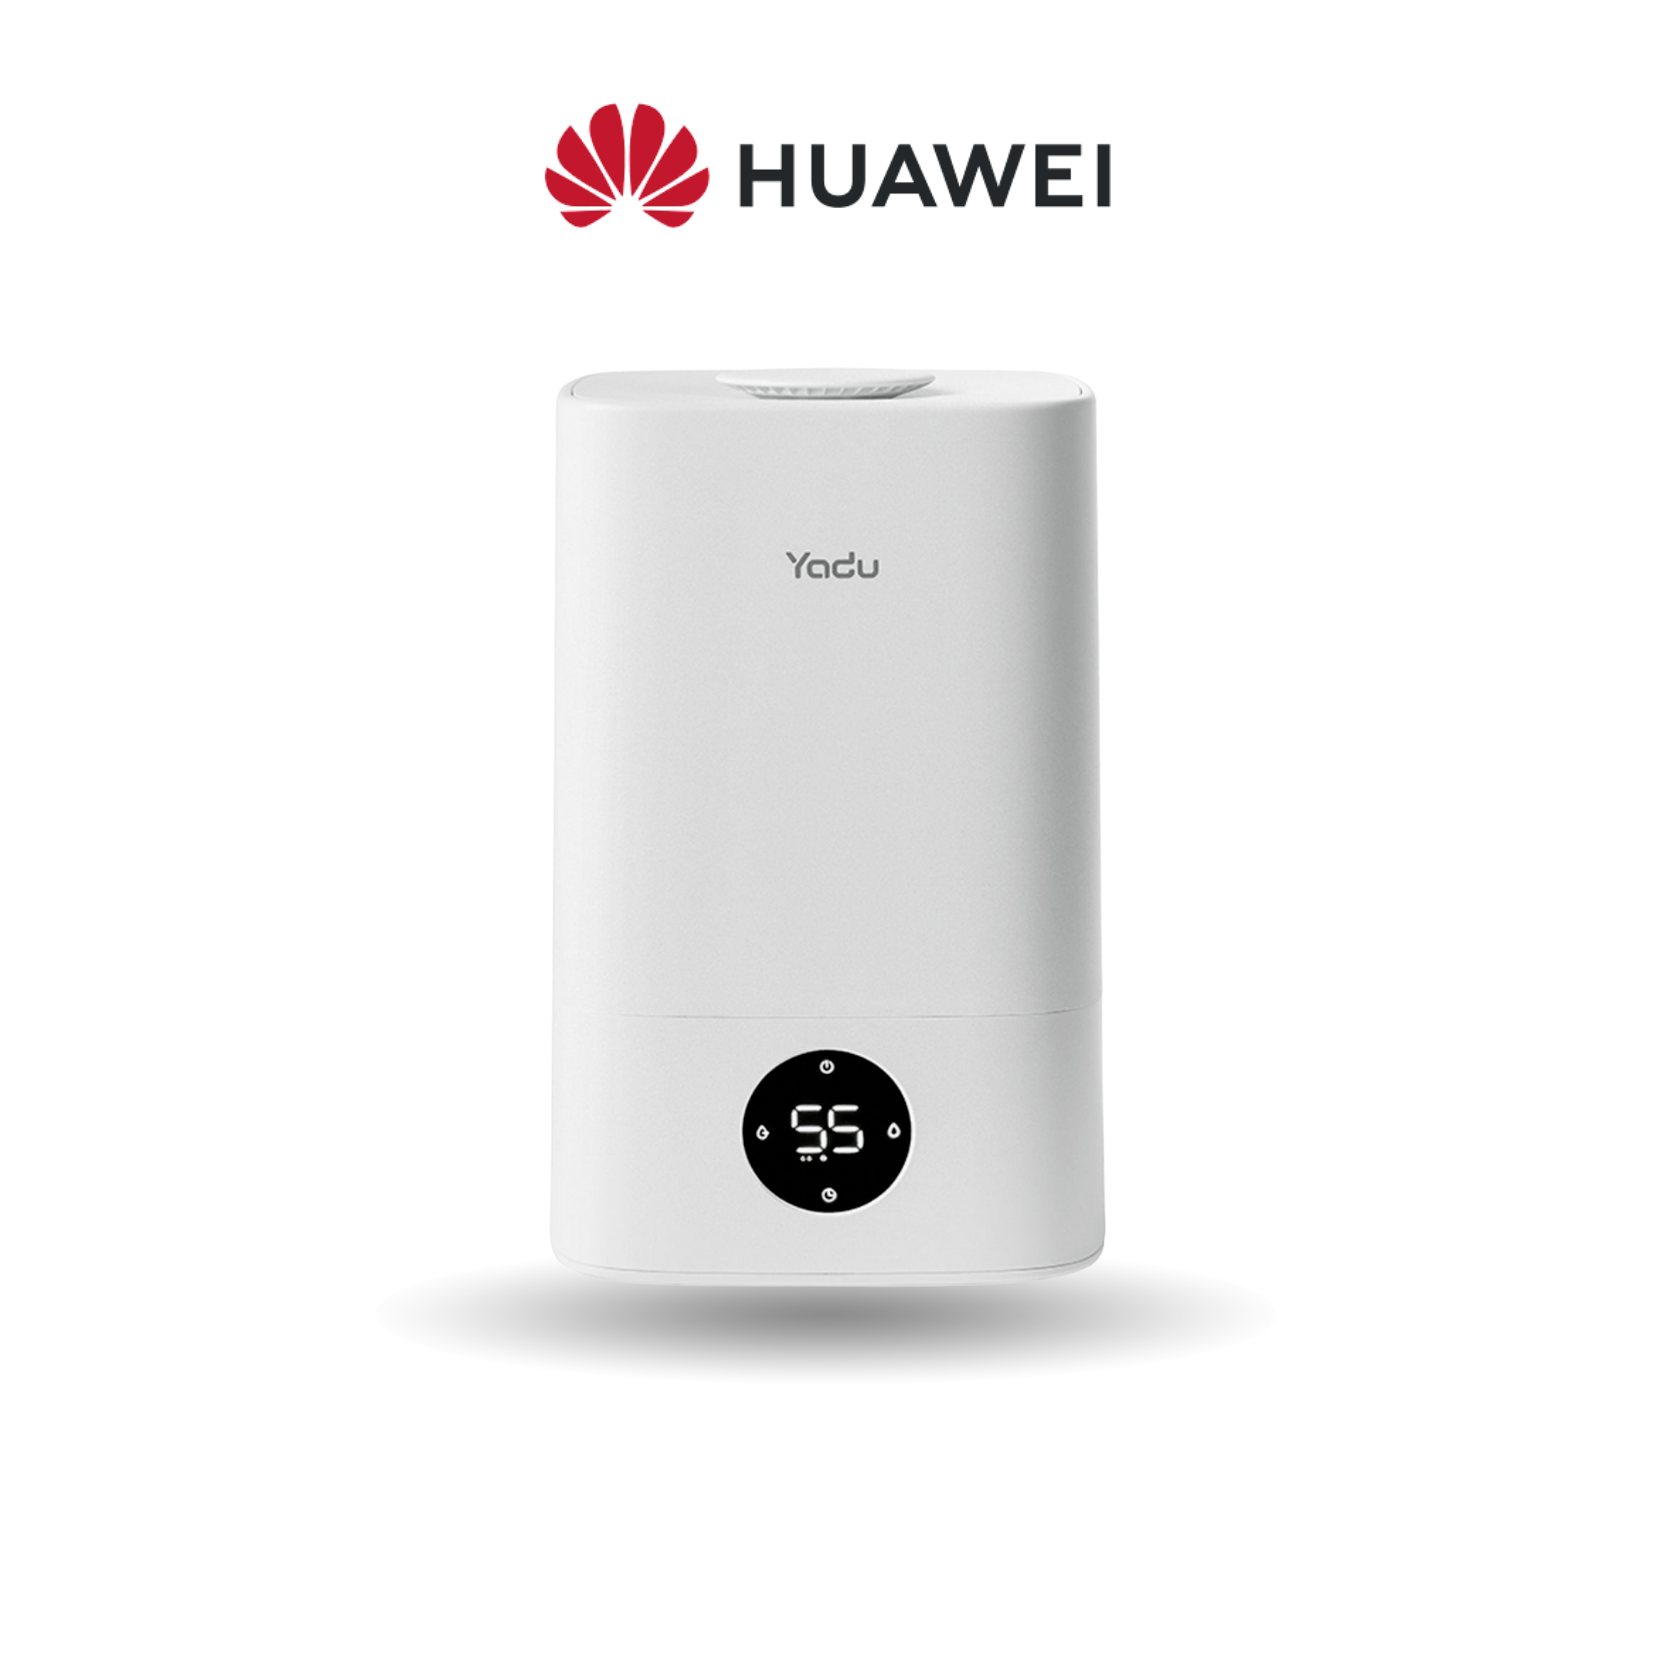 Huawei Hi-Link X Yadu Intelligent Smart Humidifier